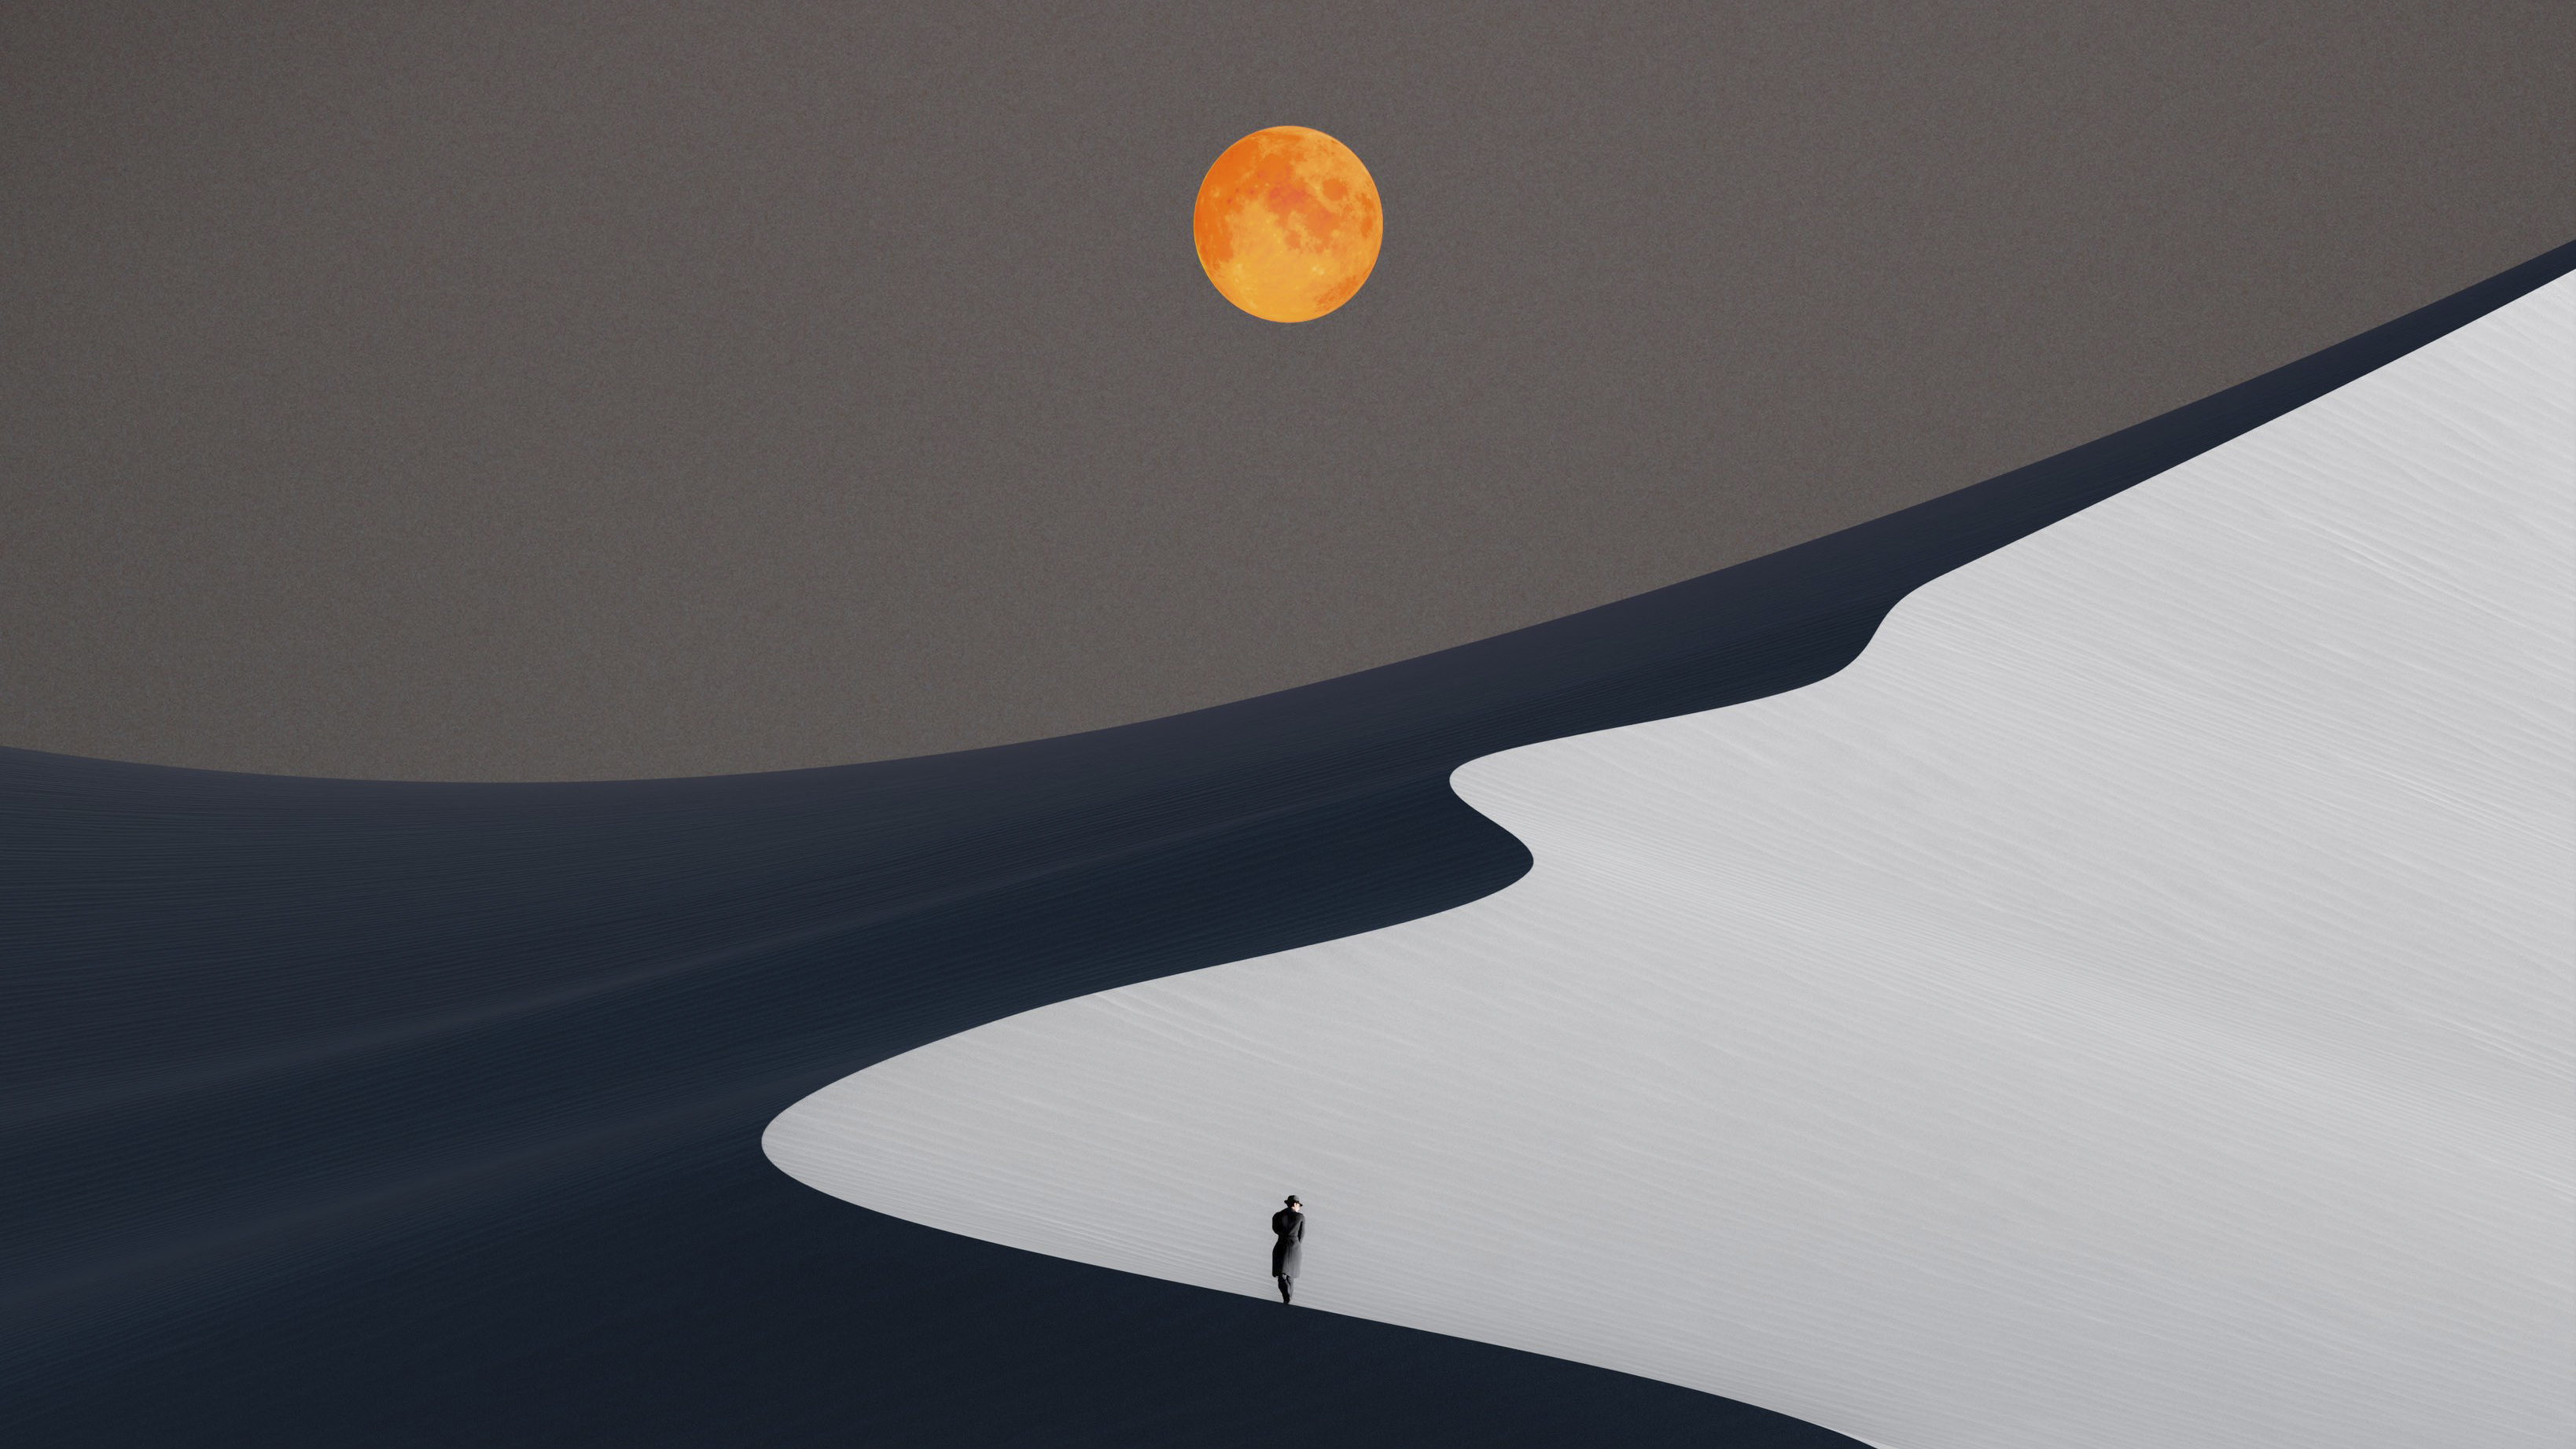 General 3276x1843 digital art artwork illustration nature landscape desert dunes sand Moon sky men alone